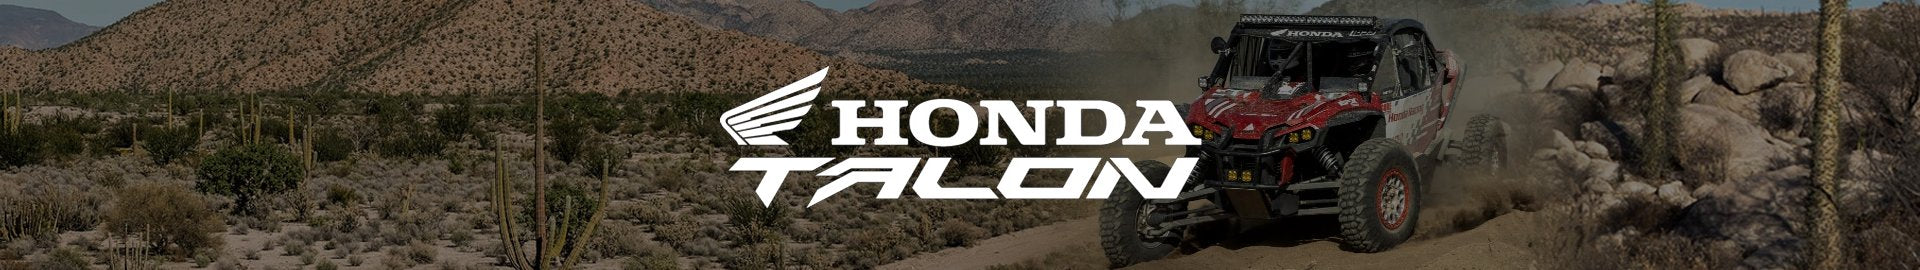 Honda Talon logo